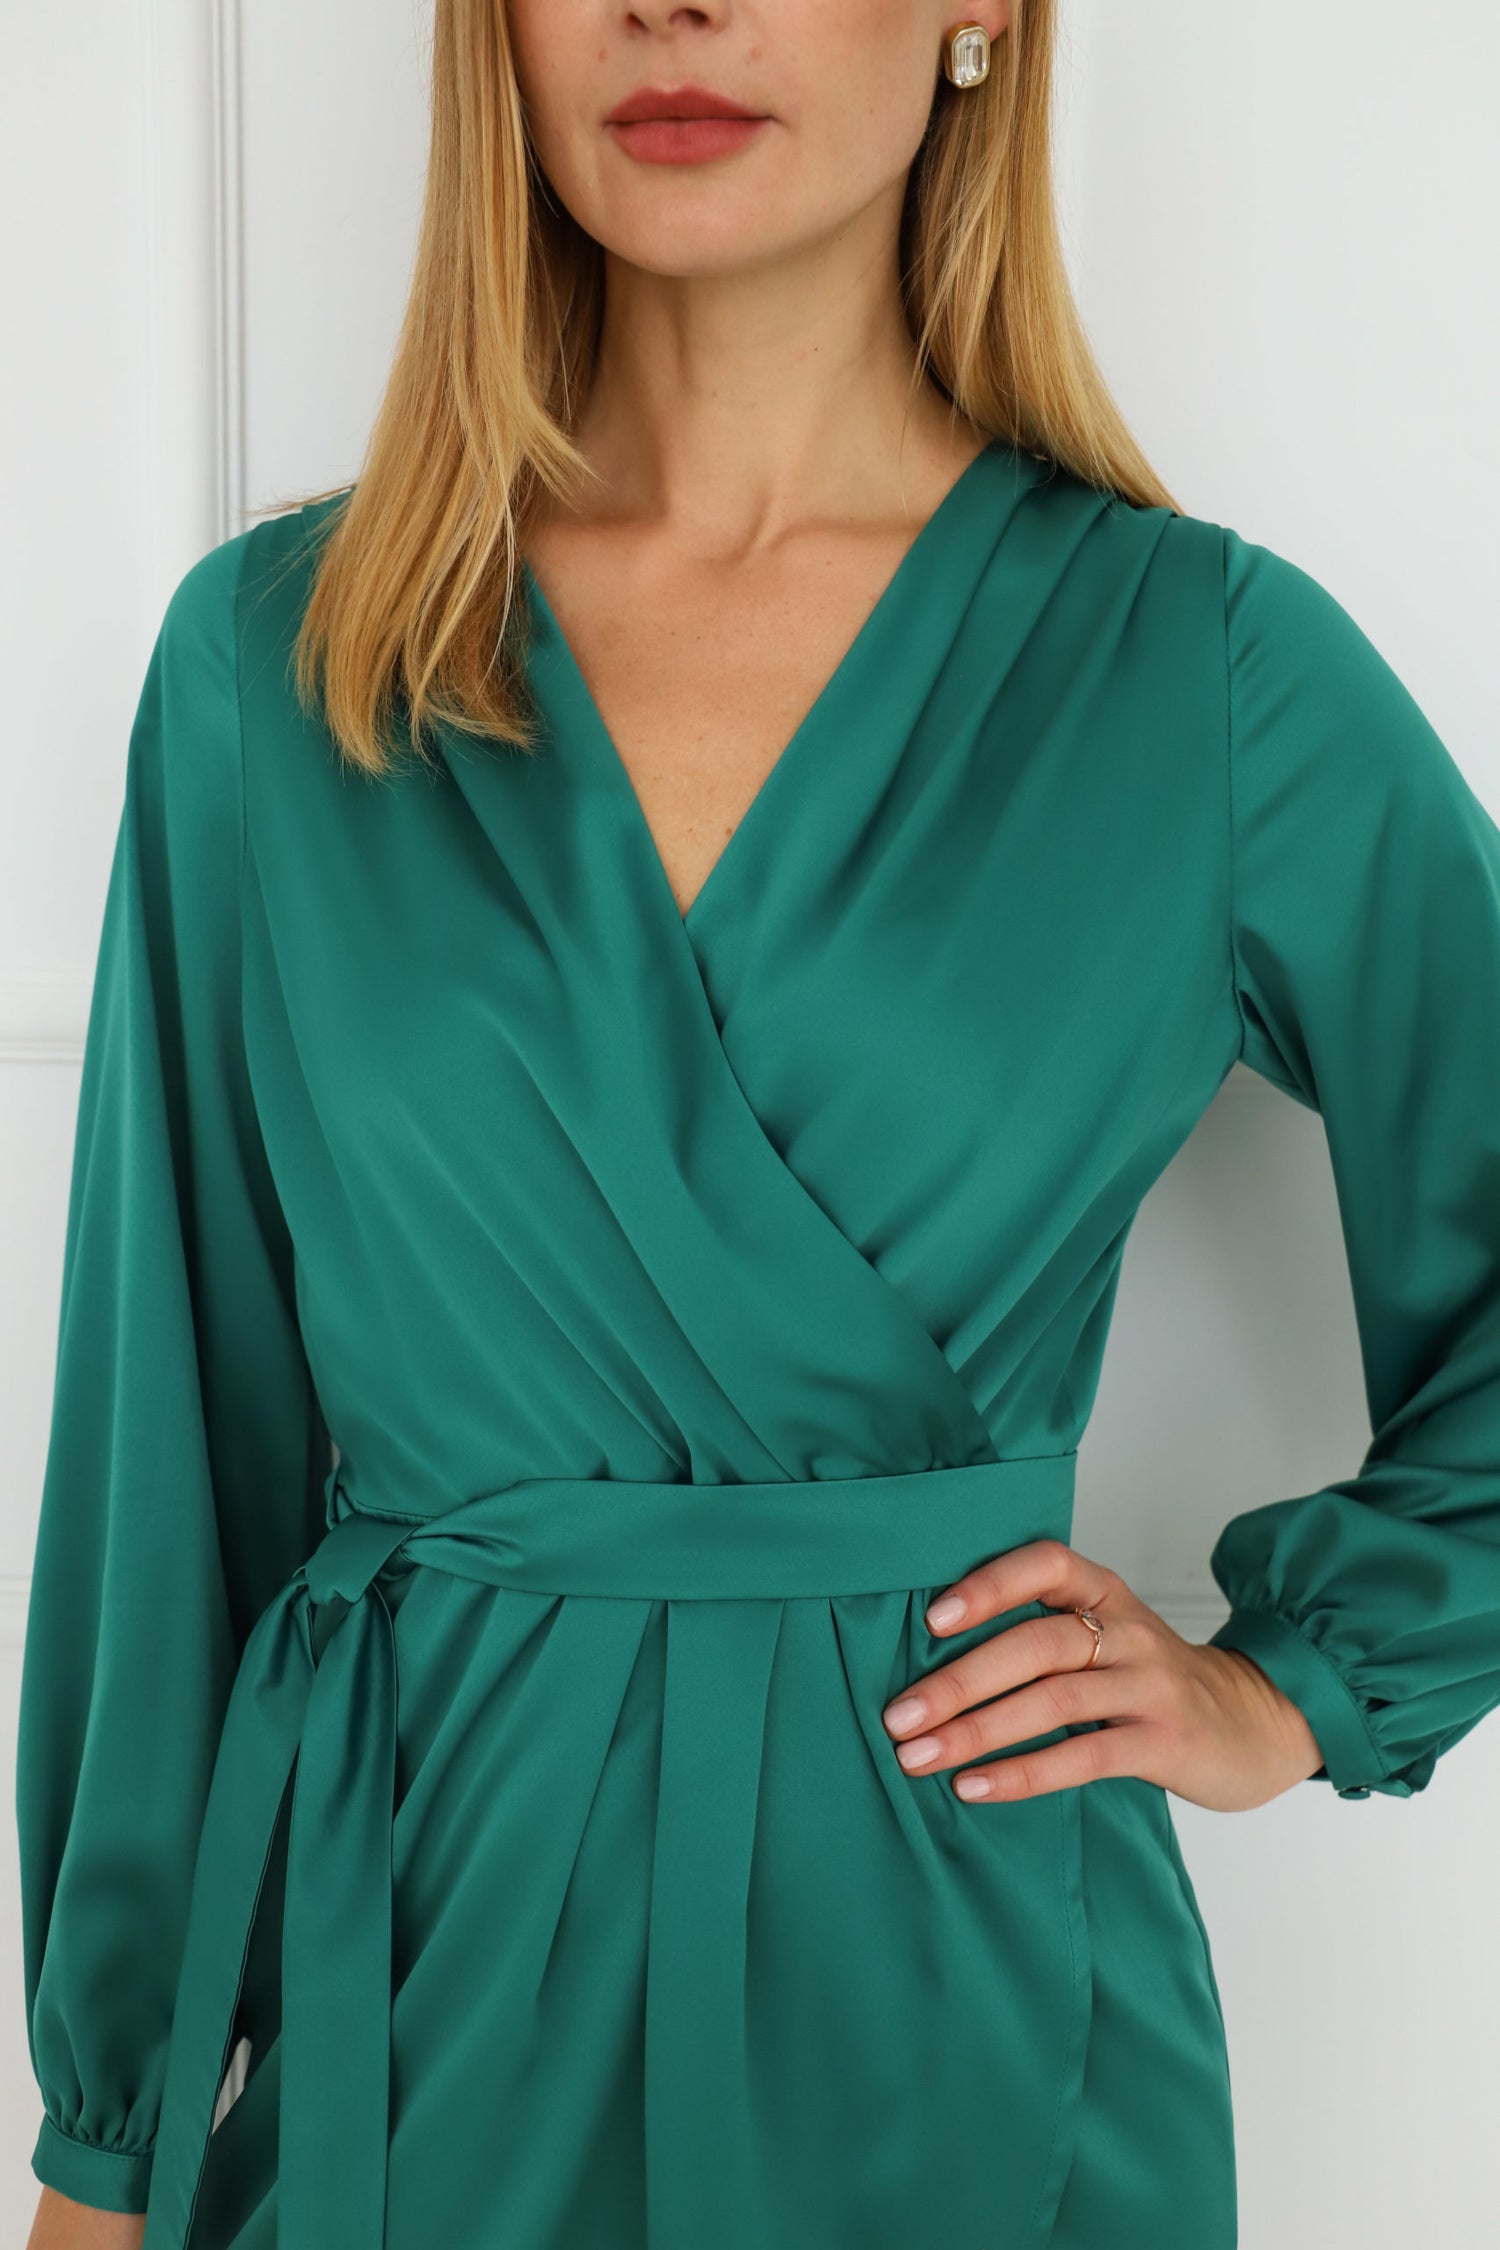 Laurel Green Dress